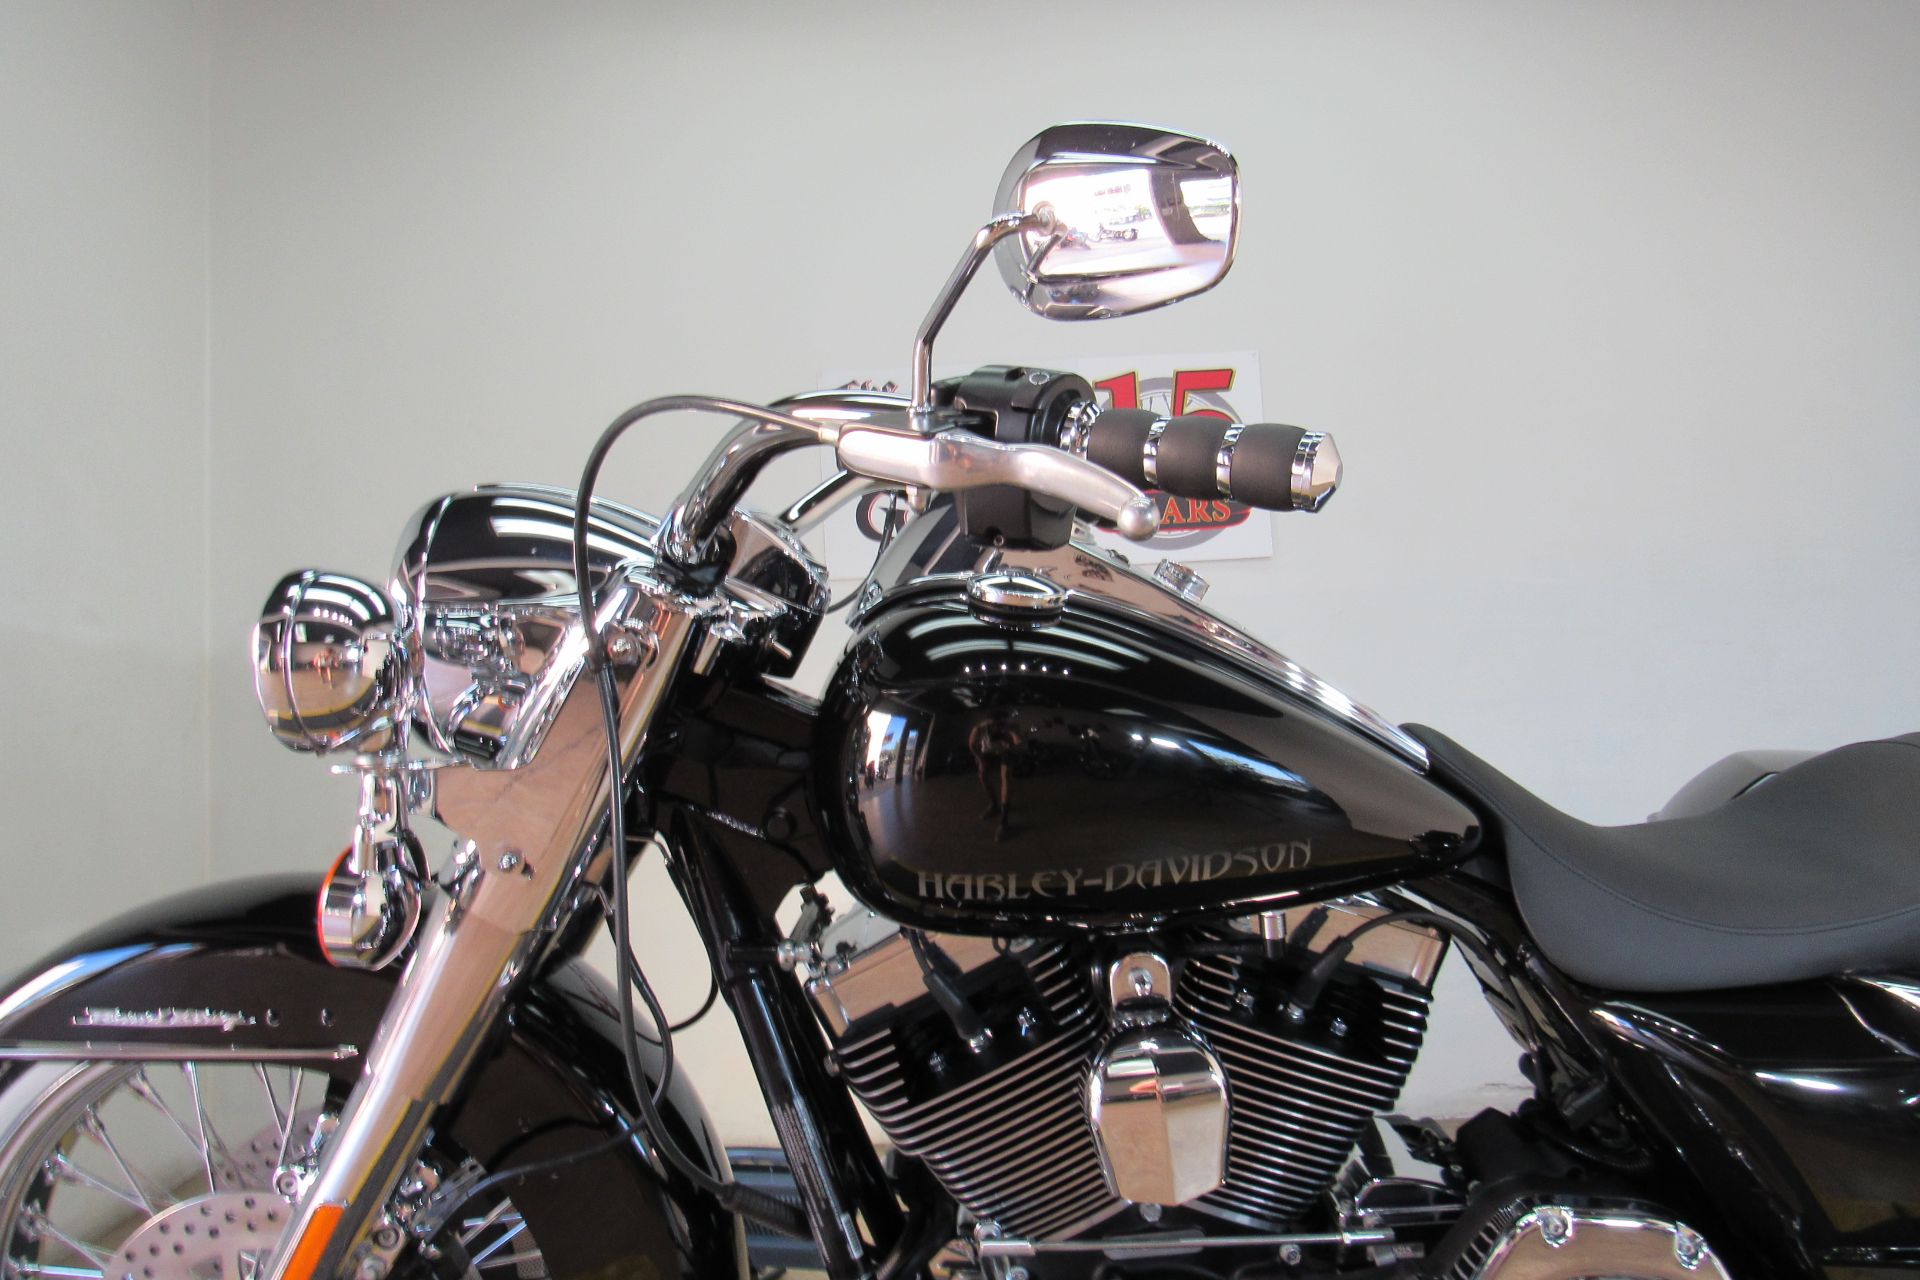 2016 Harley-Davidson Road King® in Temecula, California - Photo 6